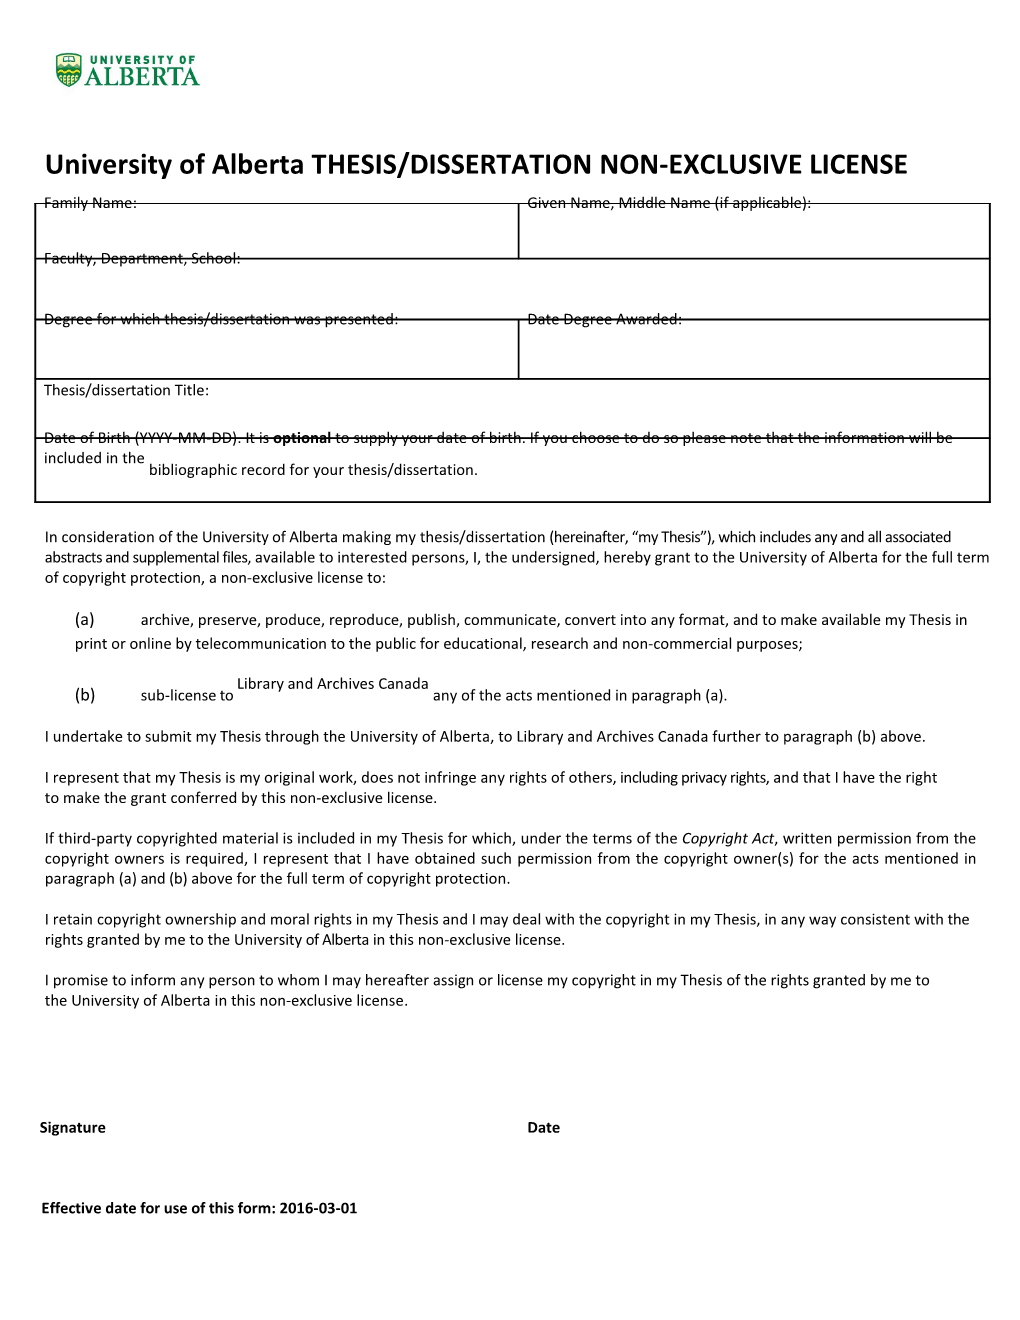 University of Alberta THESIS/DISSERTATION NON-EXCLUSIVE LICENSE